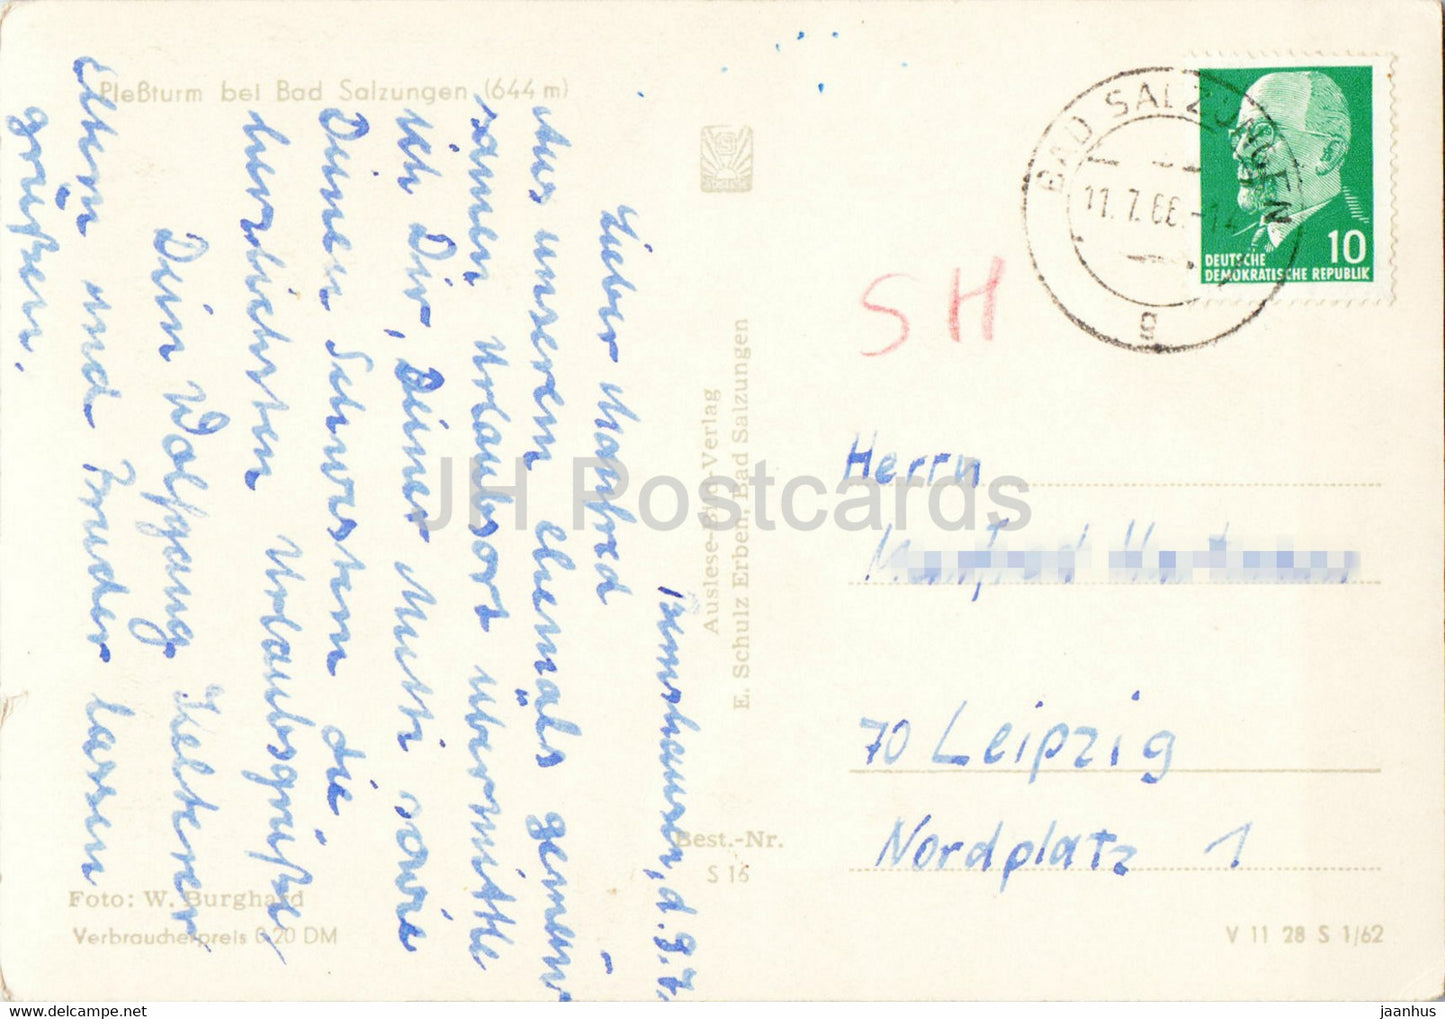 Plessturm bei Bad Salzungen 644 m - old postcard - 1966 - Germany DDR - used